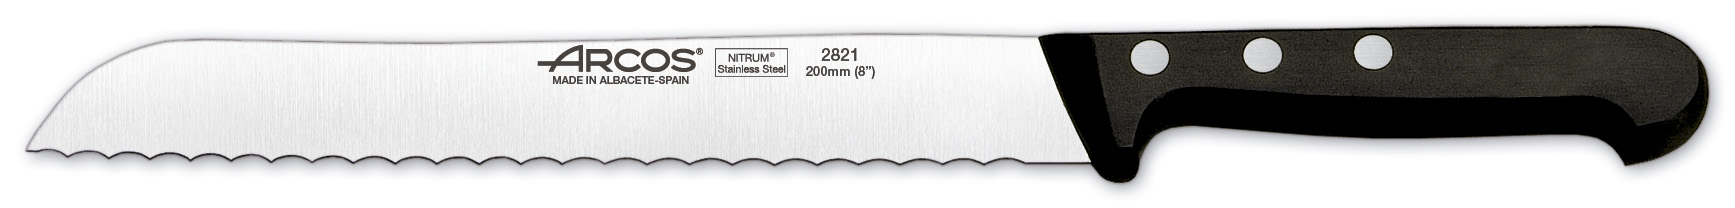 סכין לחם ארקוס דגם 2821 - Arcos